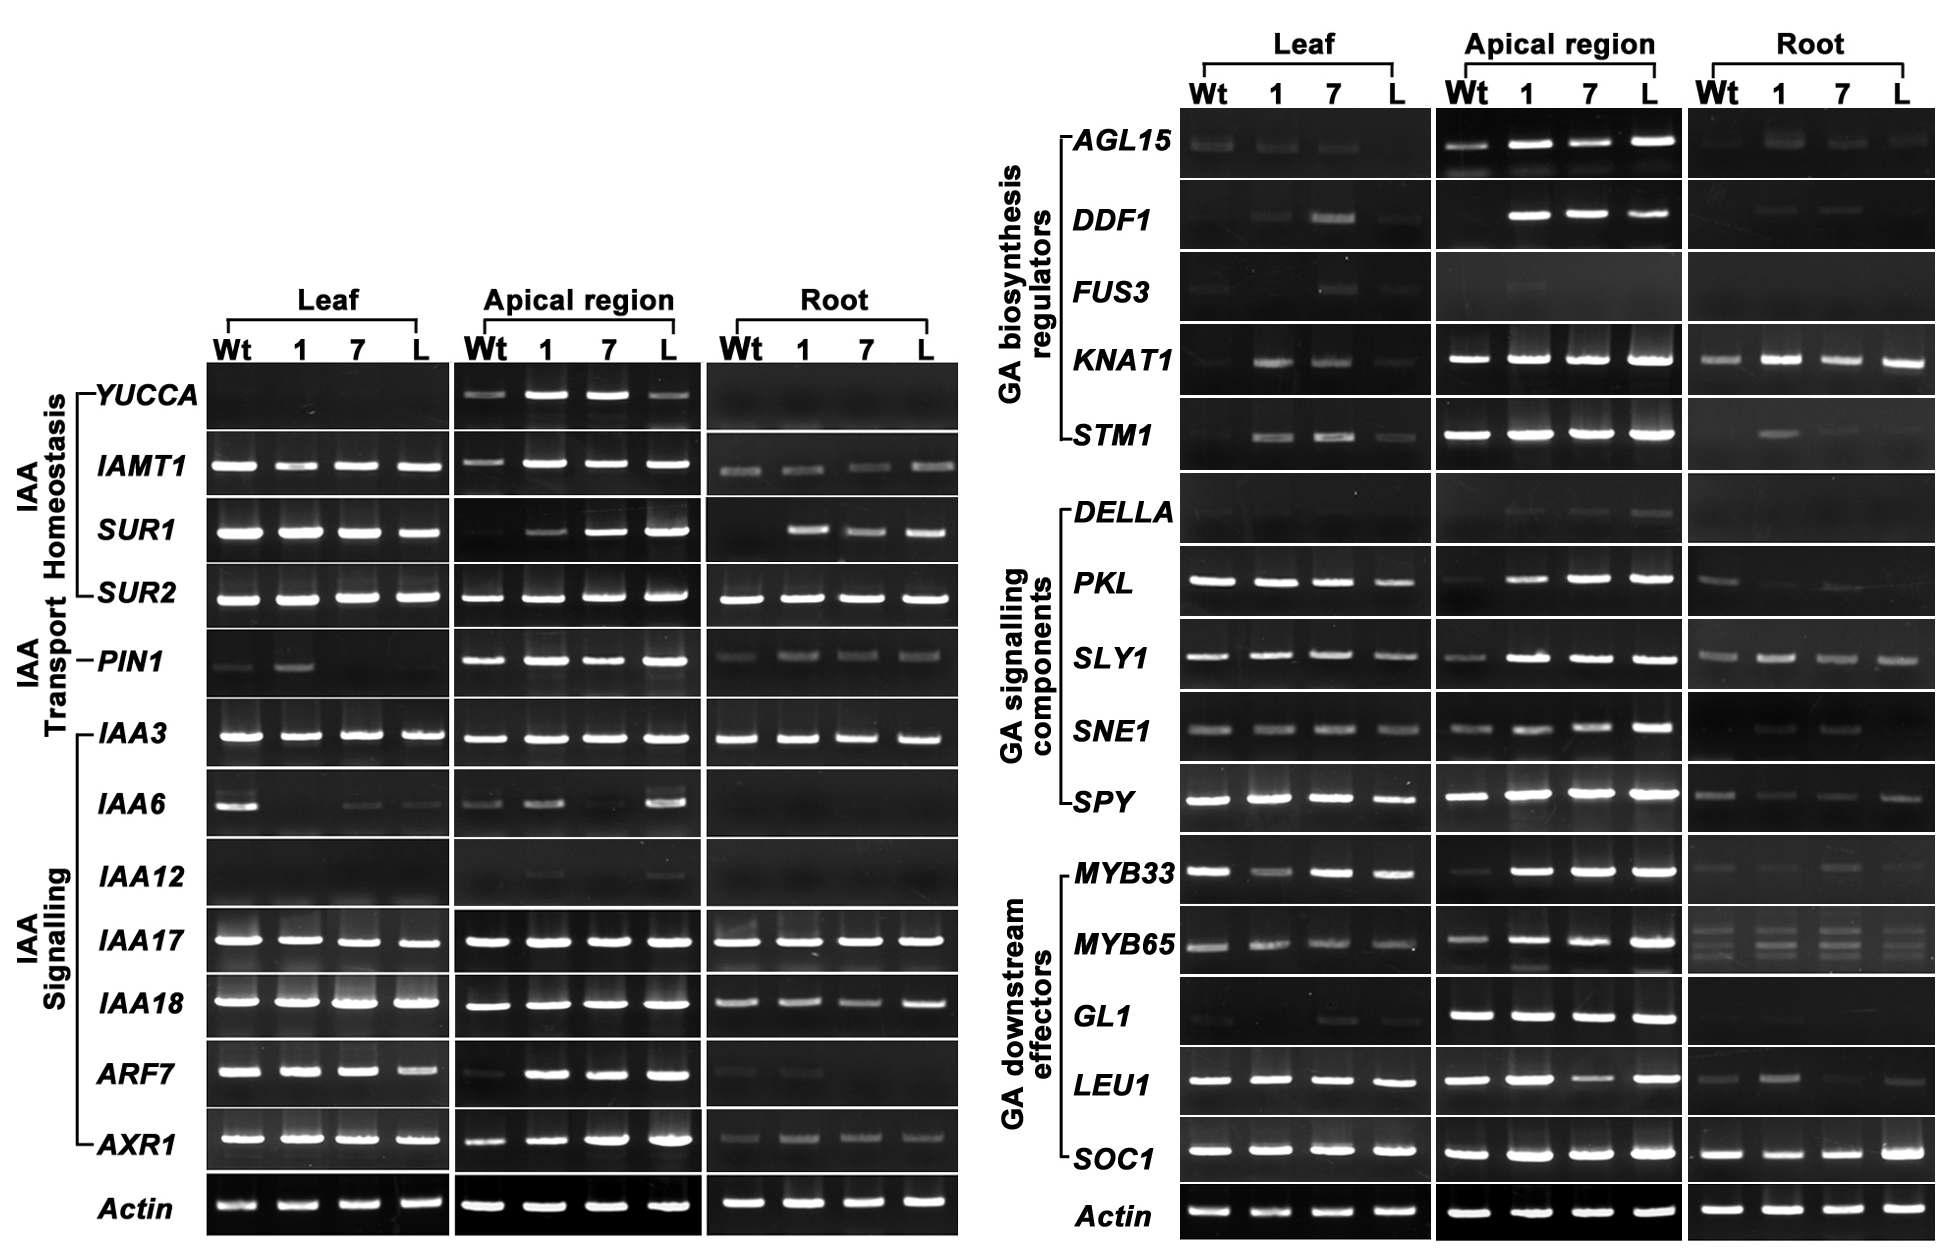 BrSTY1, BrSR S7, BrLR P 1유전자가 도입된 형질전환 애기장대 잎, 뿌리, 정단분열조직에서 성장조절 호르몬성 GA 와 auxin-related 유전자들의 발현양상을 semi-quantitative RT-PCR을 이용하여 분석.